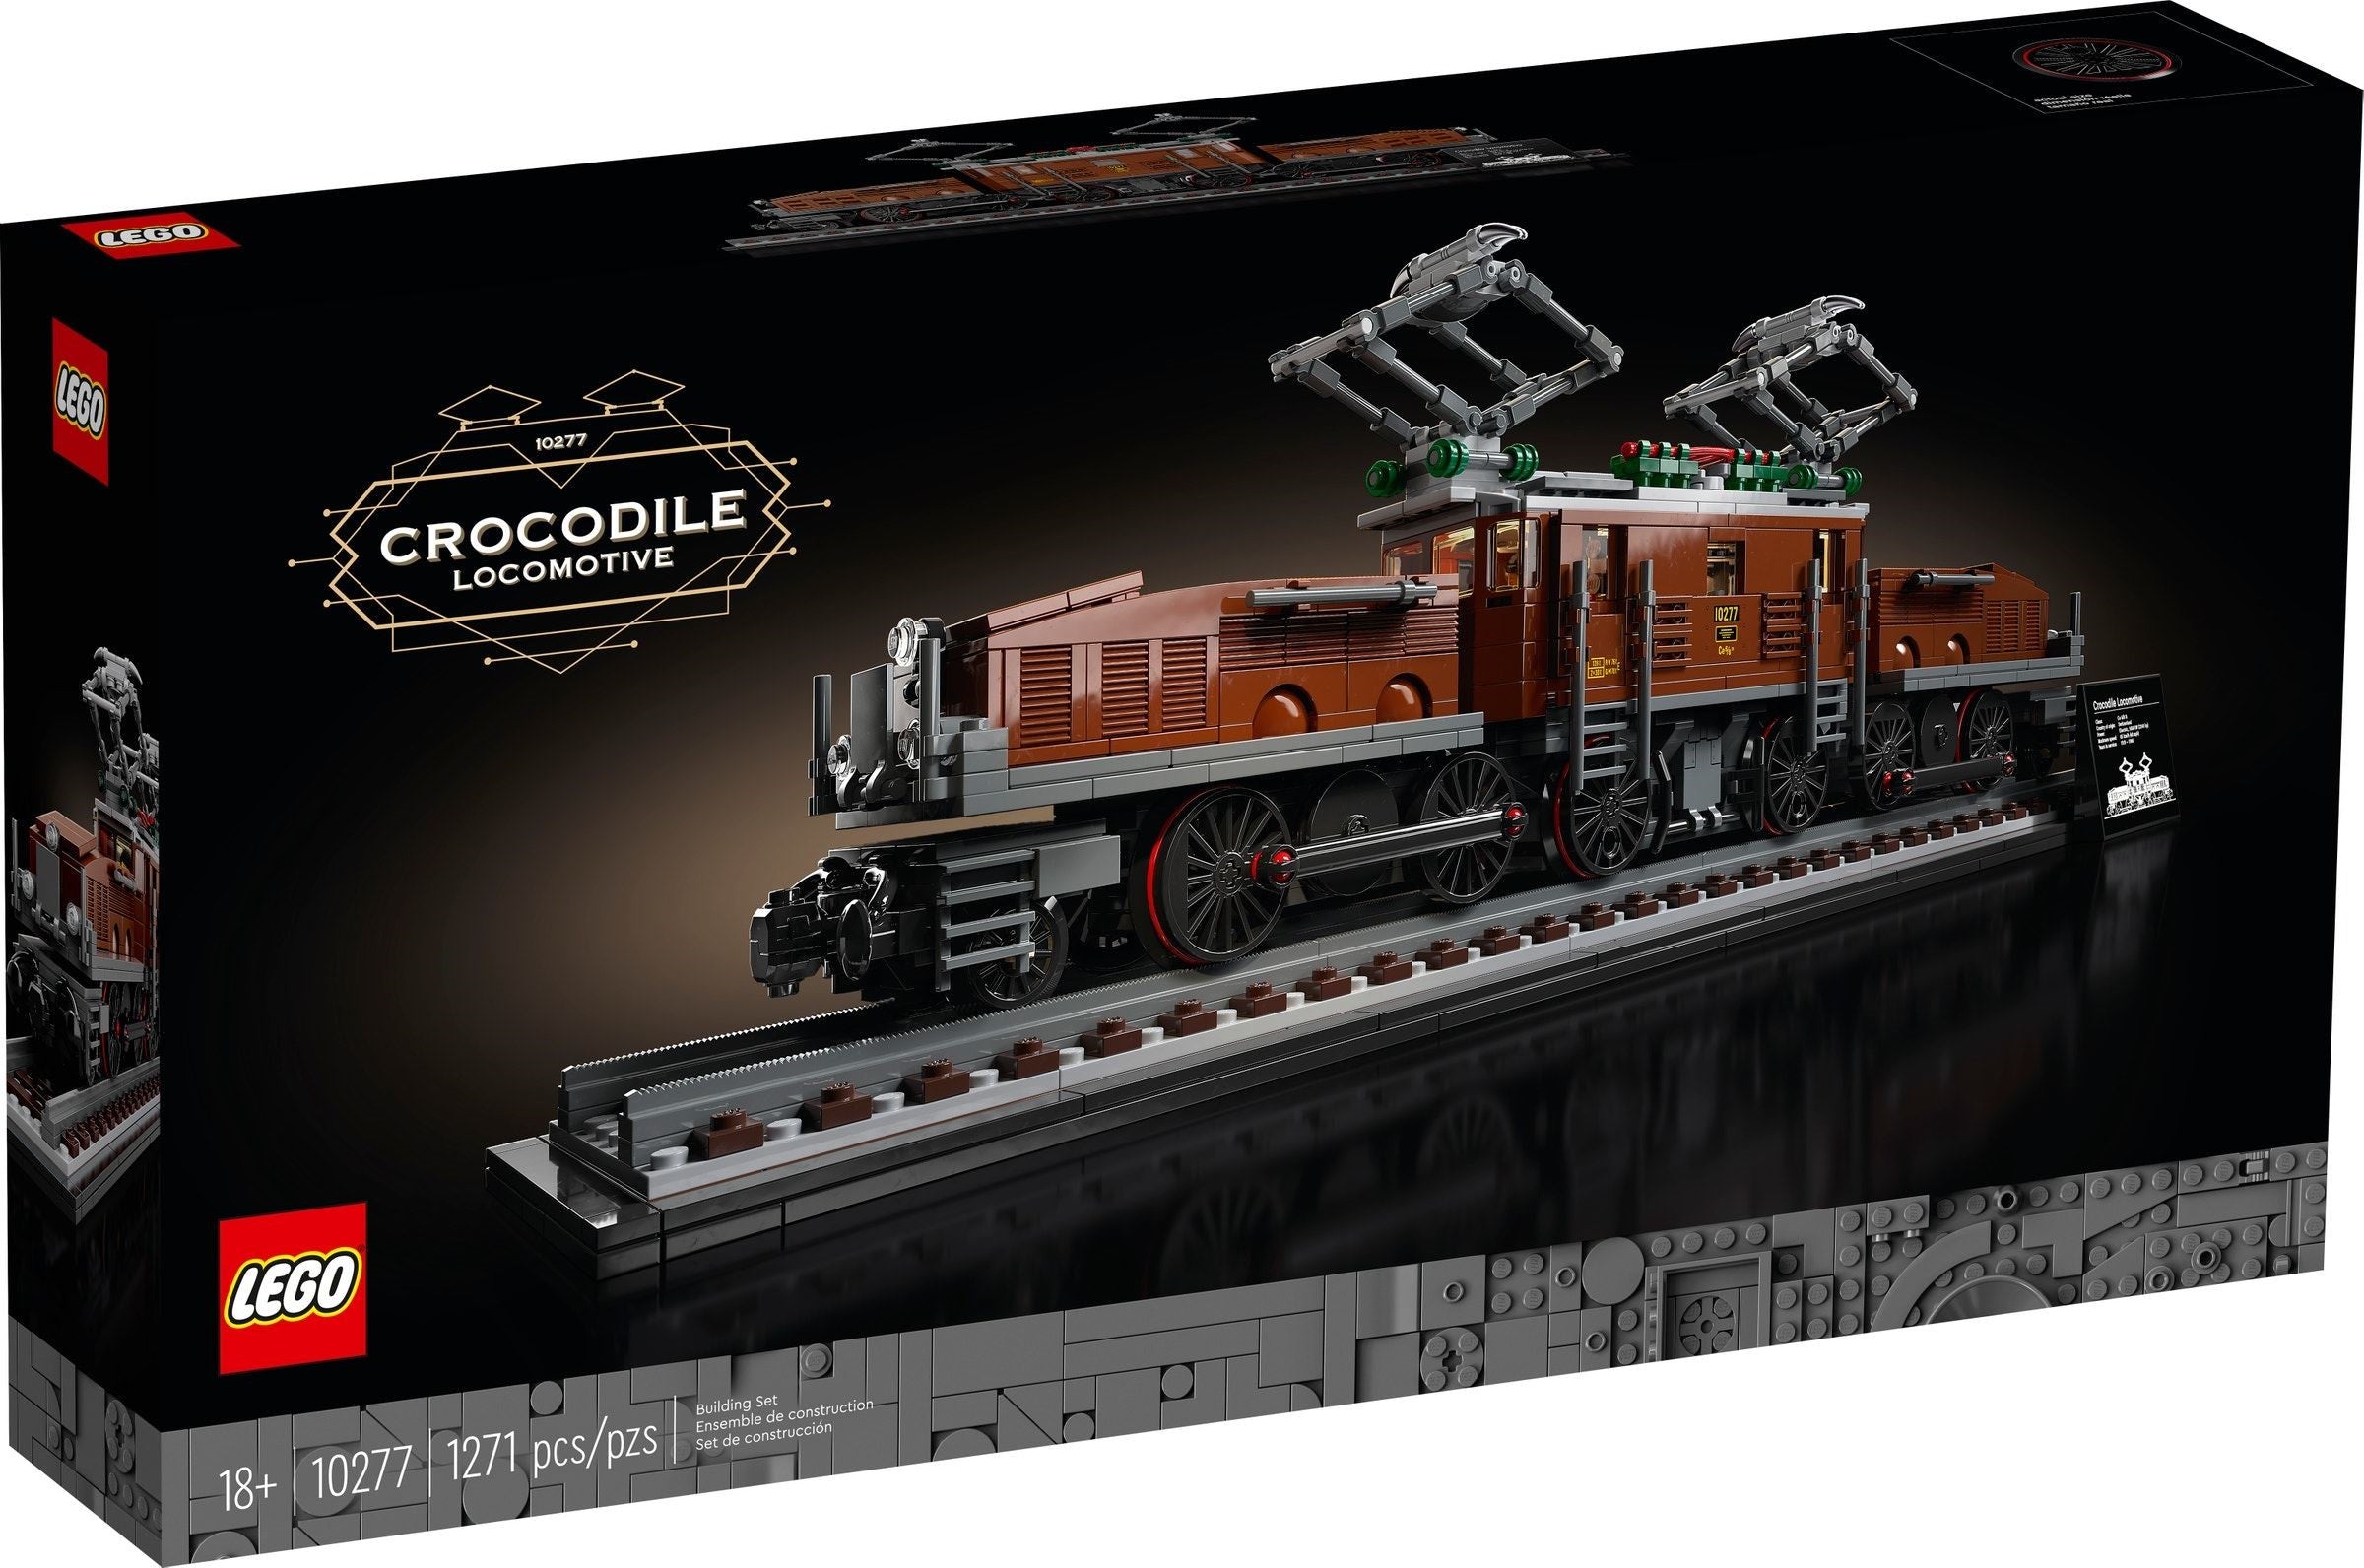 Lego Exclusive 10277 - Crocodile Locomotive